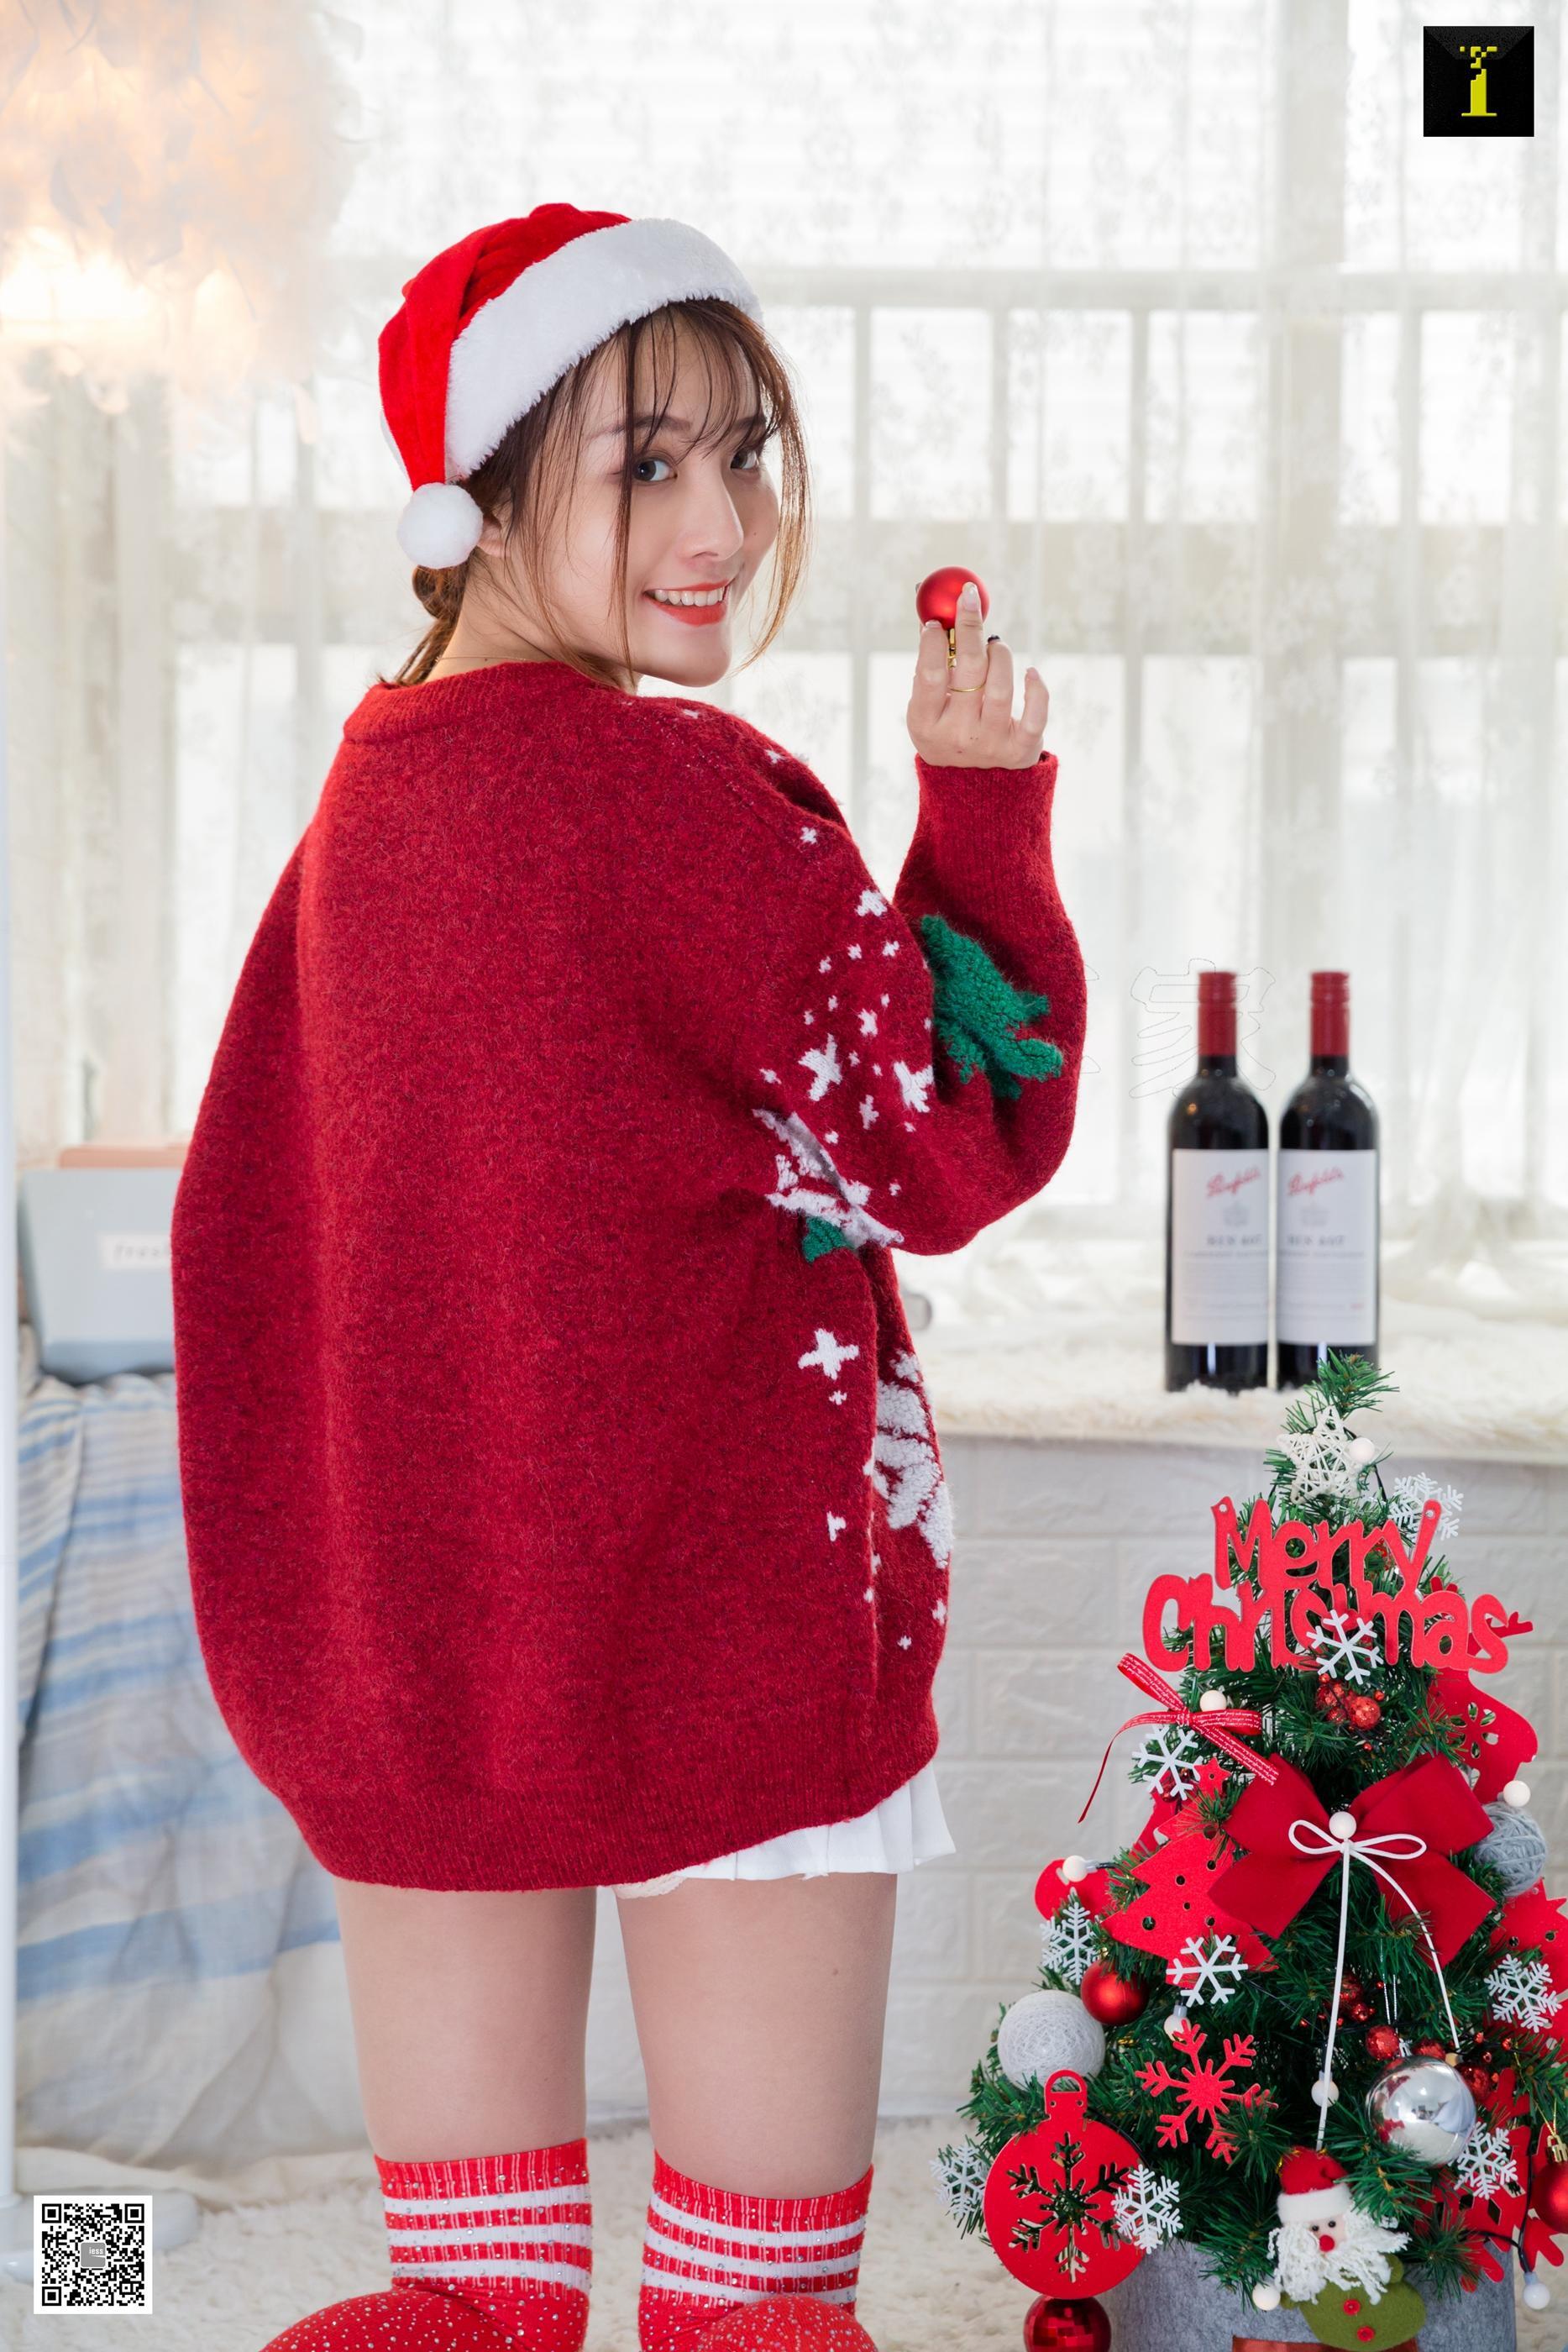 IESS: December 18, 2019 sixiangjia 649: Wanping - red wine and Christmas